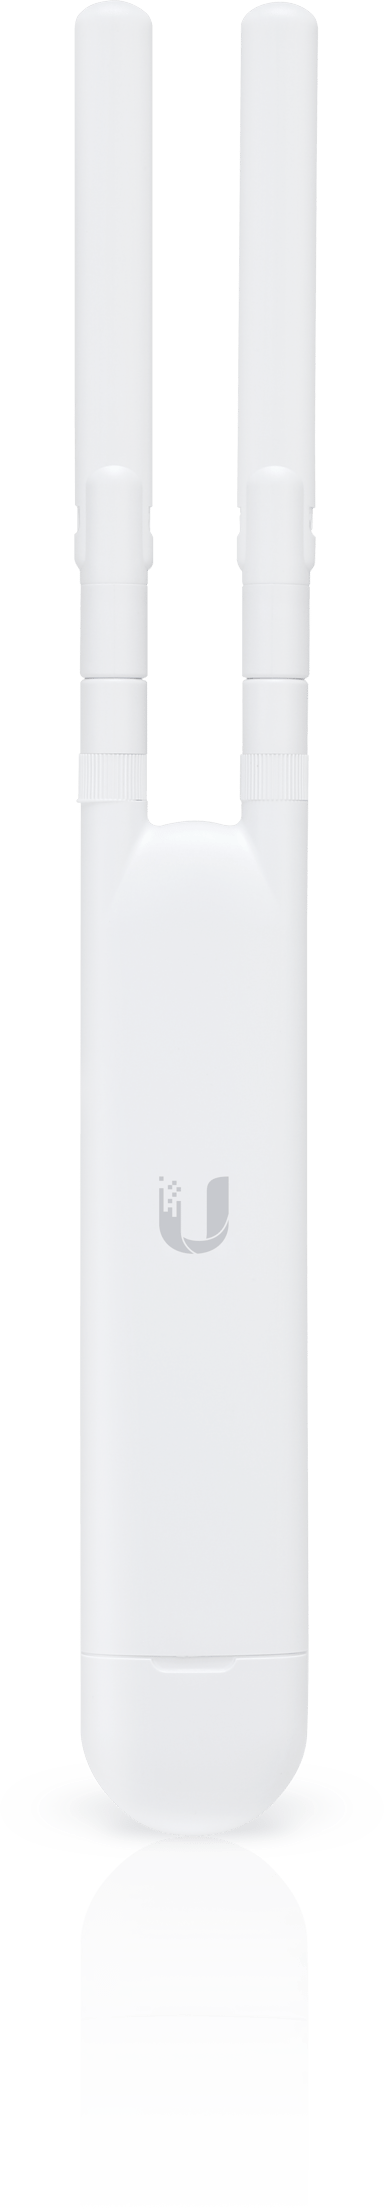 Ubiquiti Unifi UAP-AC-M 